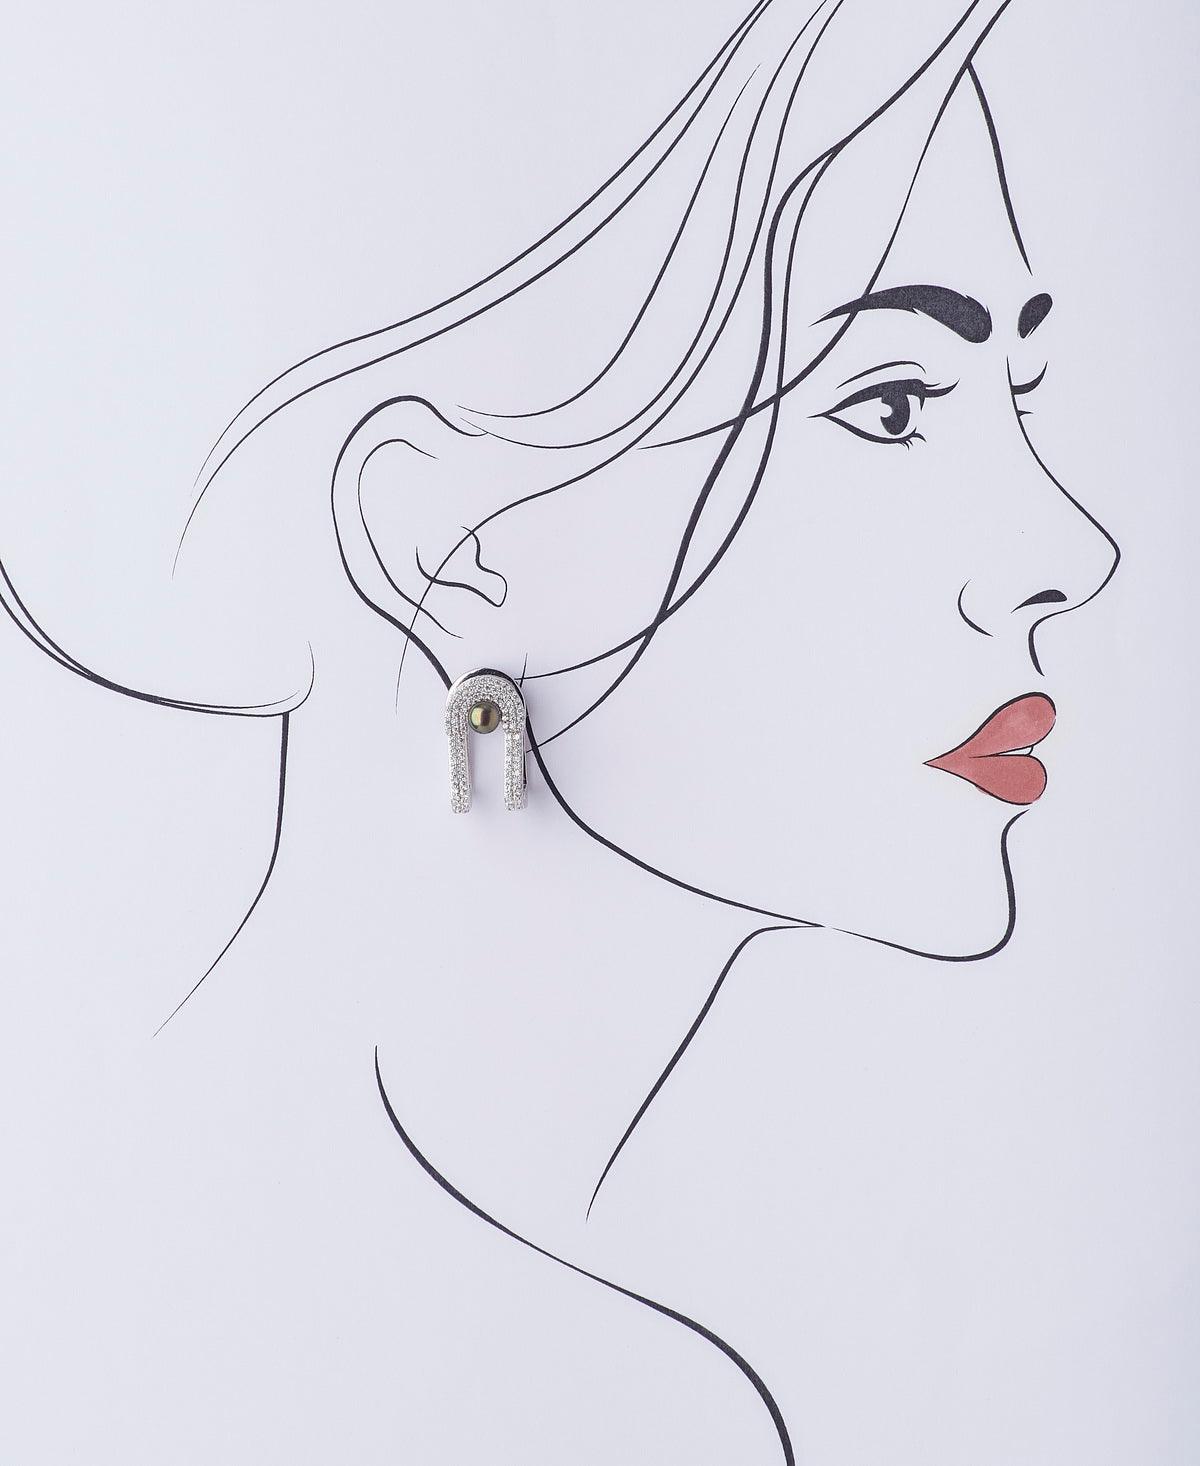 Graceful Rhodium hanging Earring - Chandrani Pearls